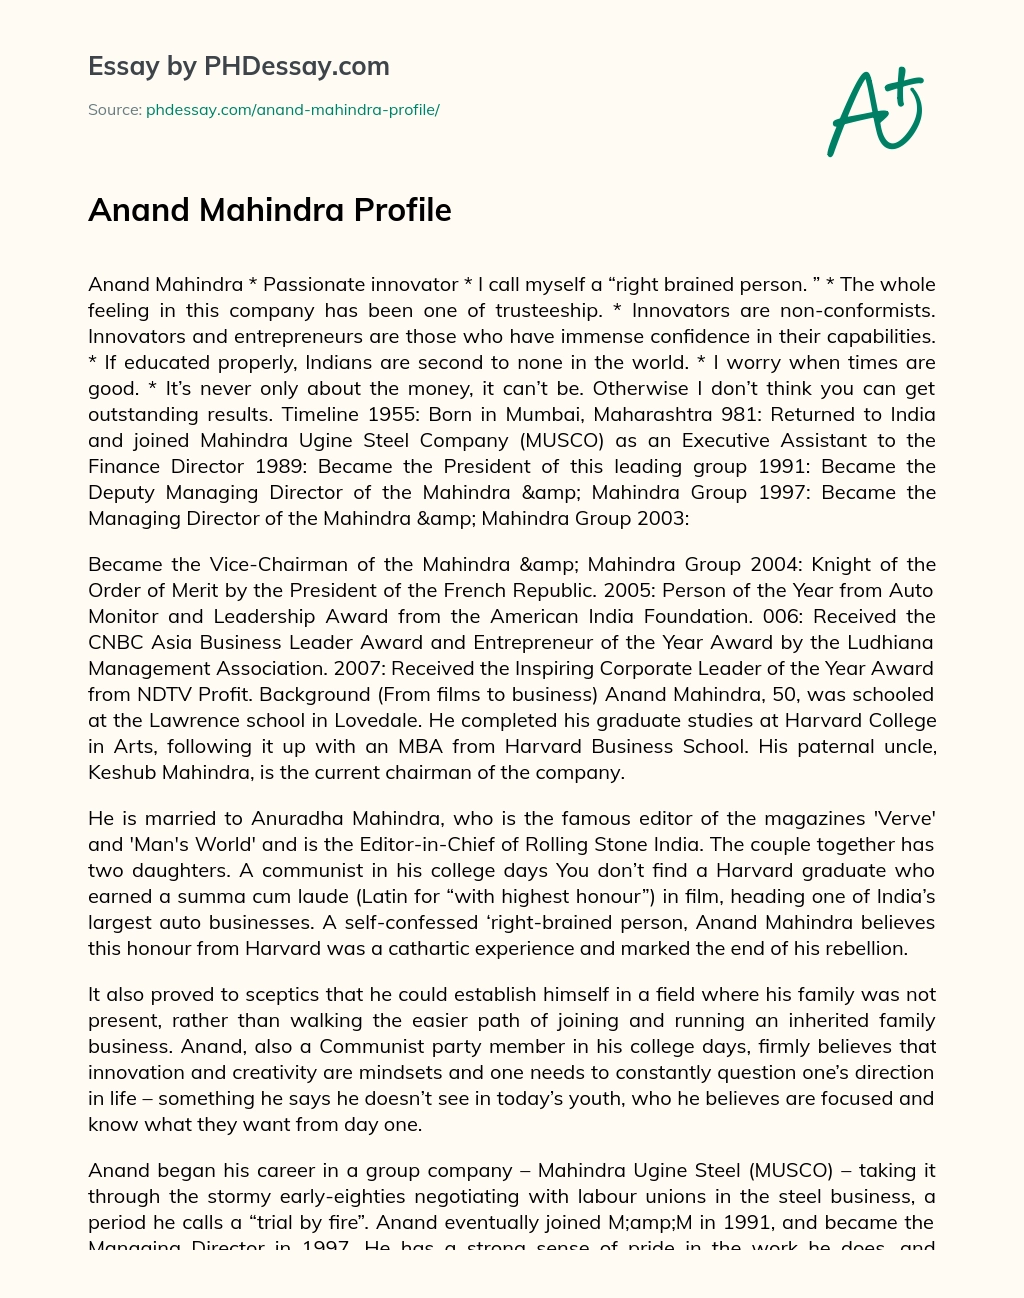 Anand Mahindra Profile essay